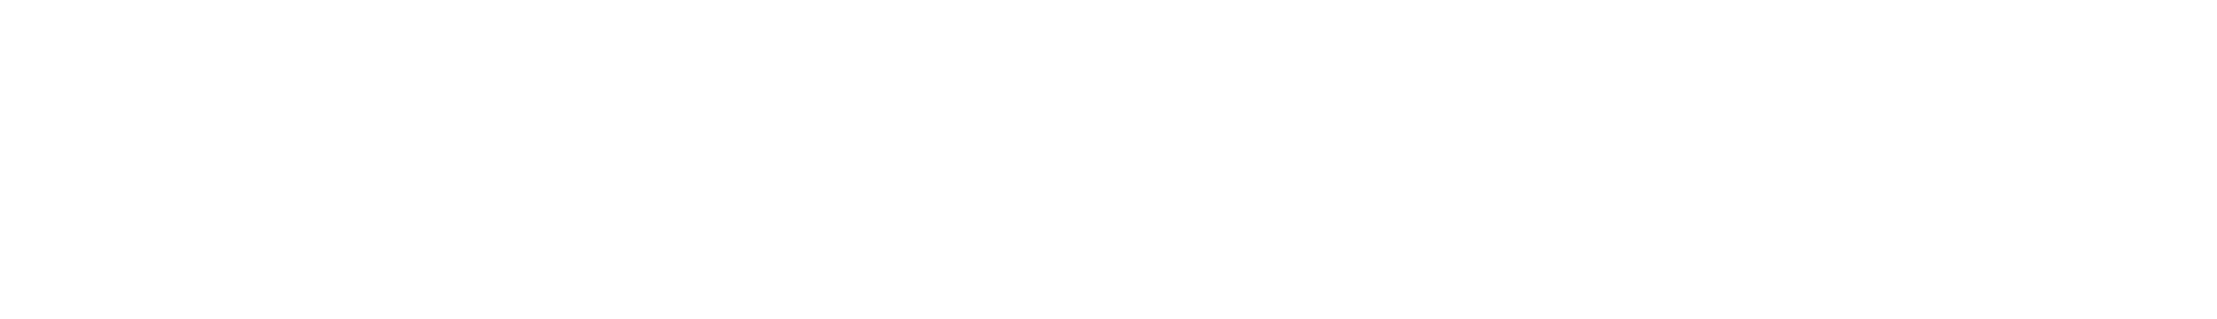 JRET - Jornal RET